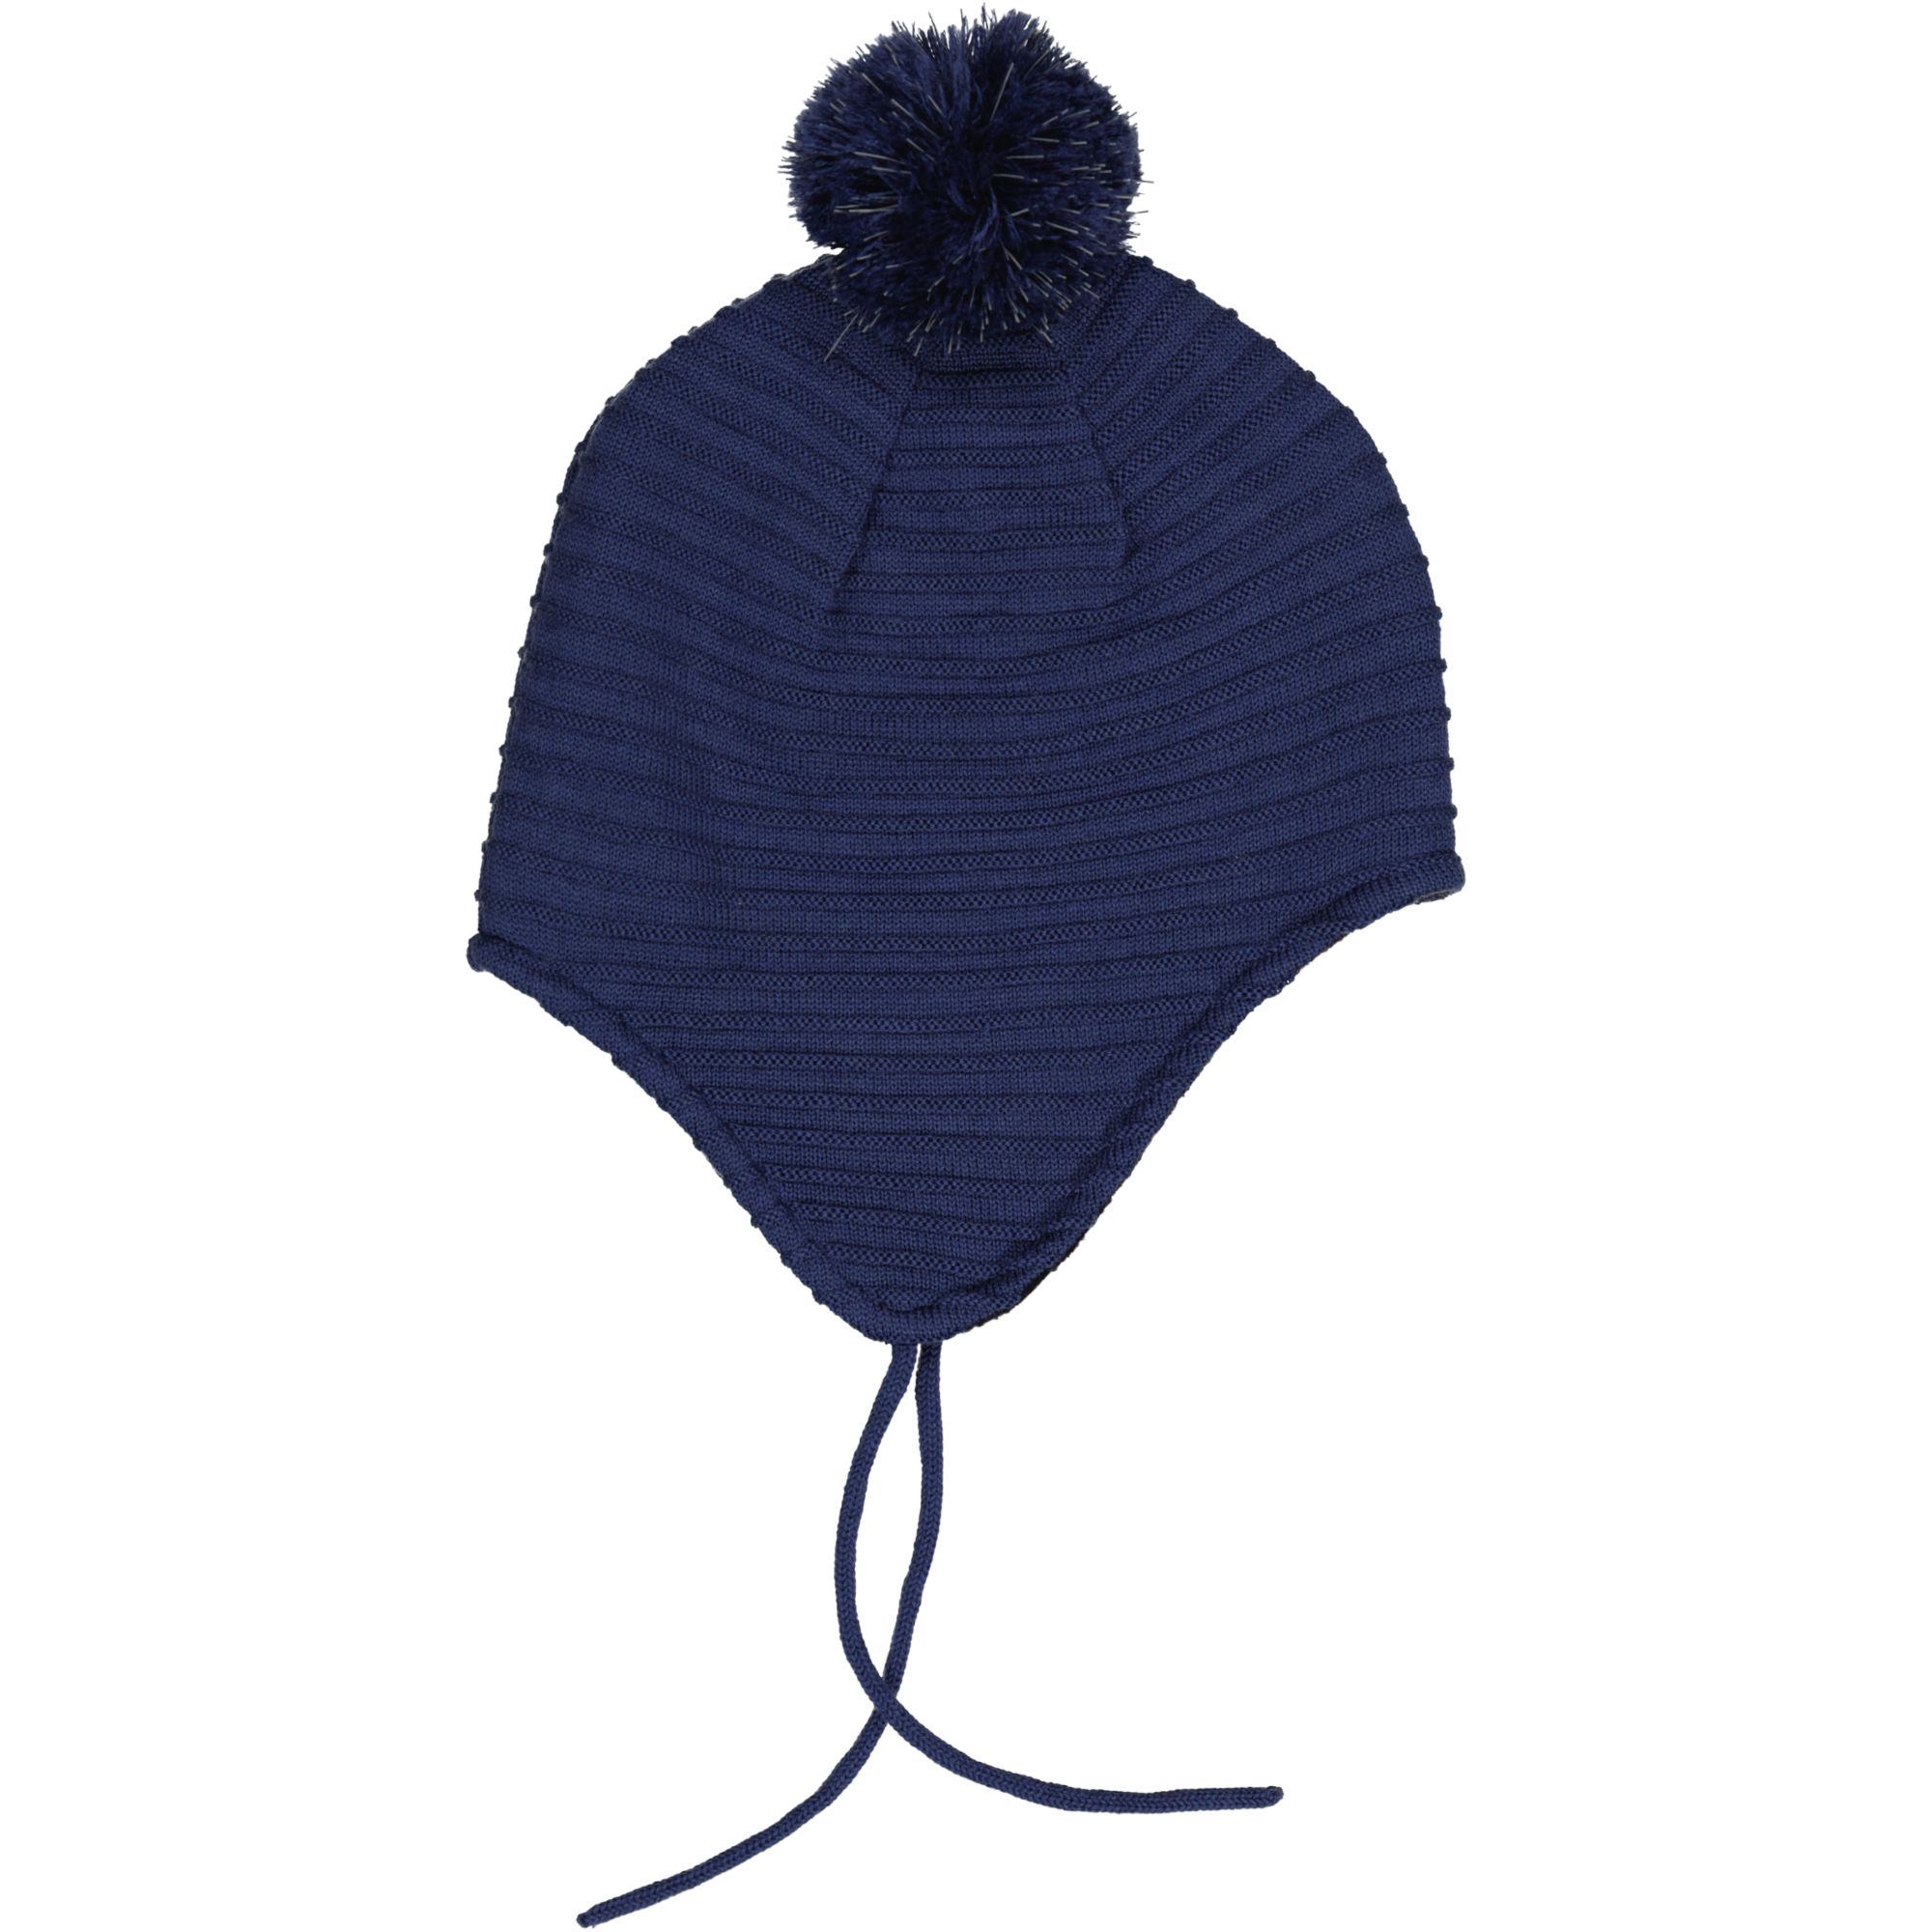 Knitted helmet hat Dark blue